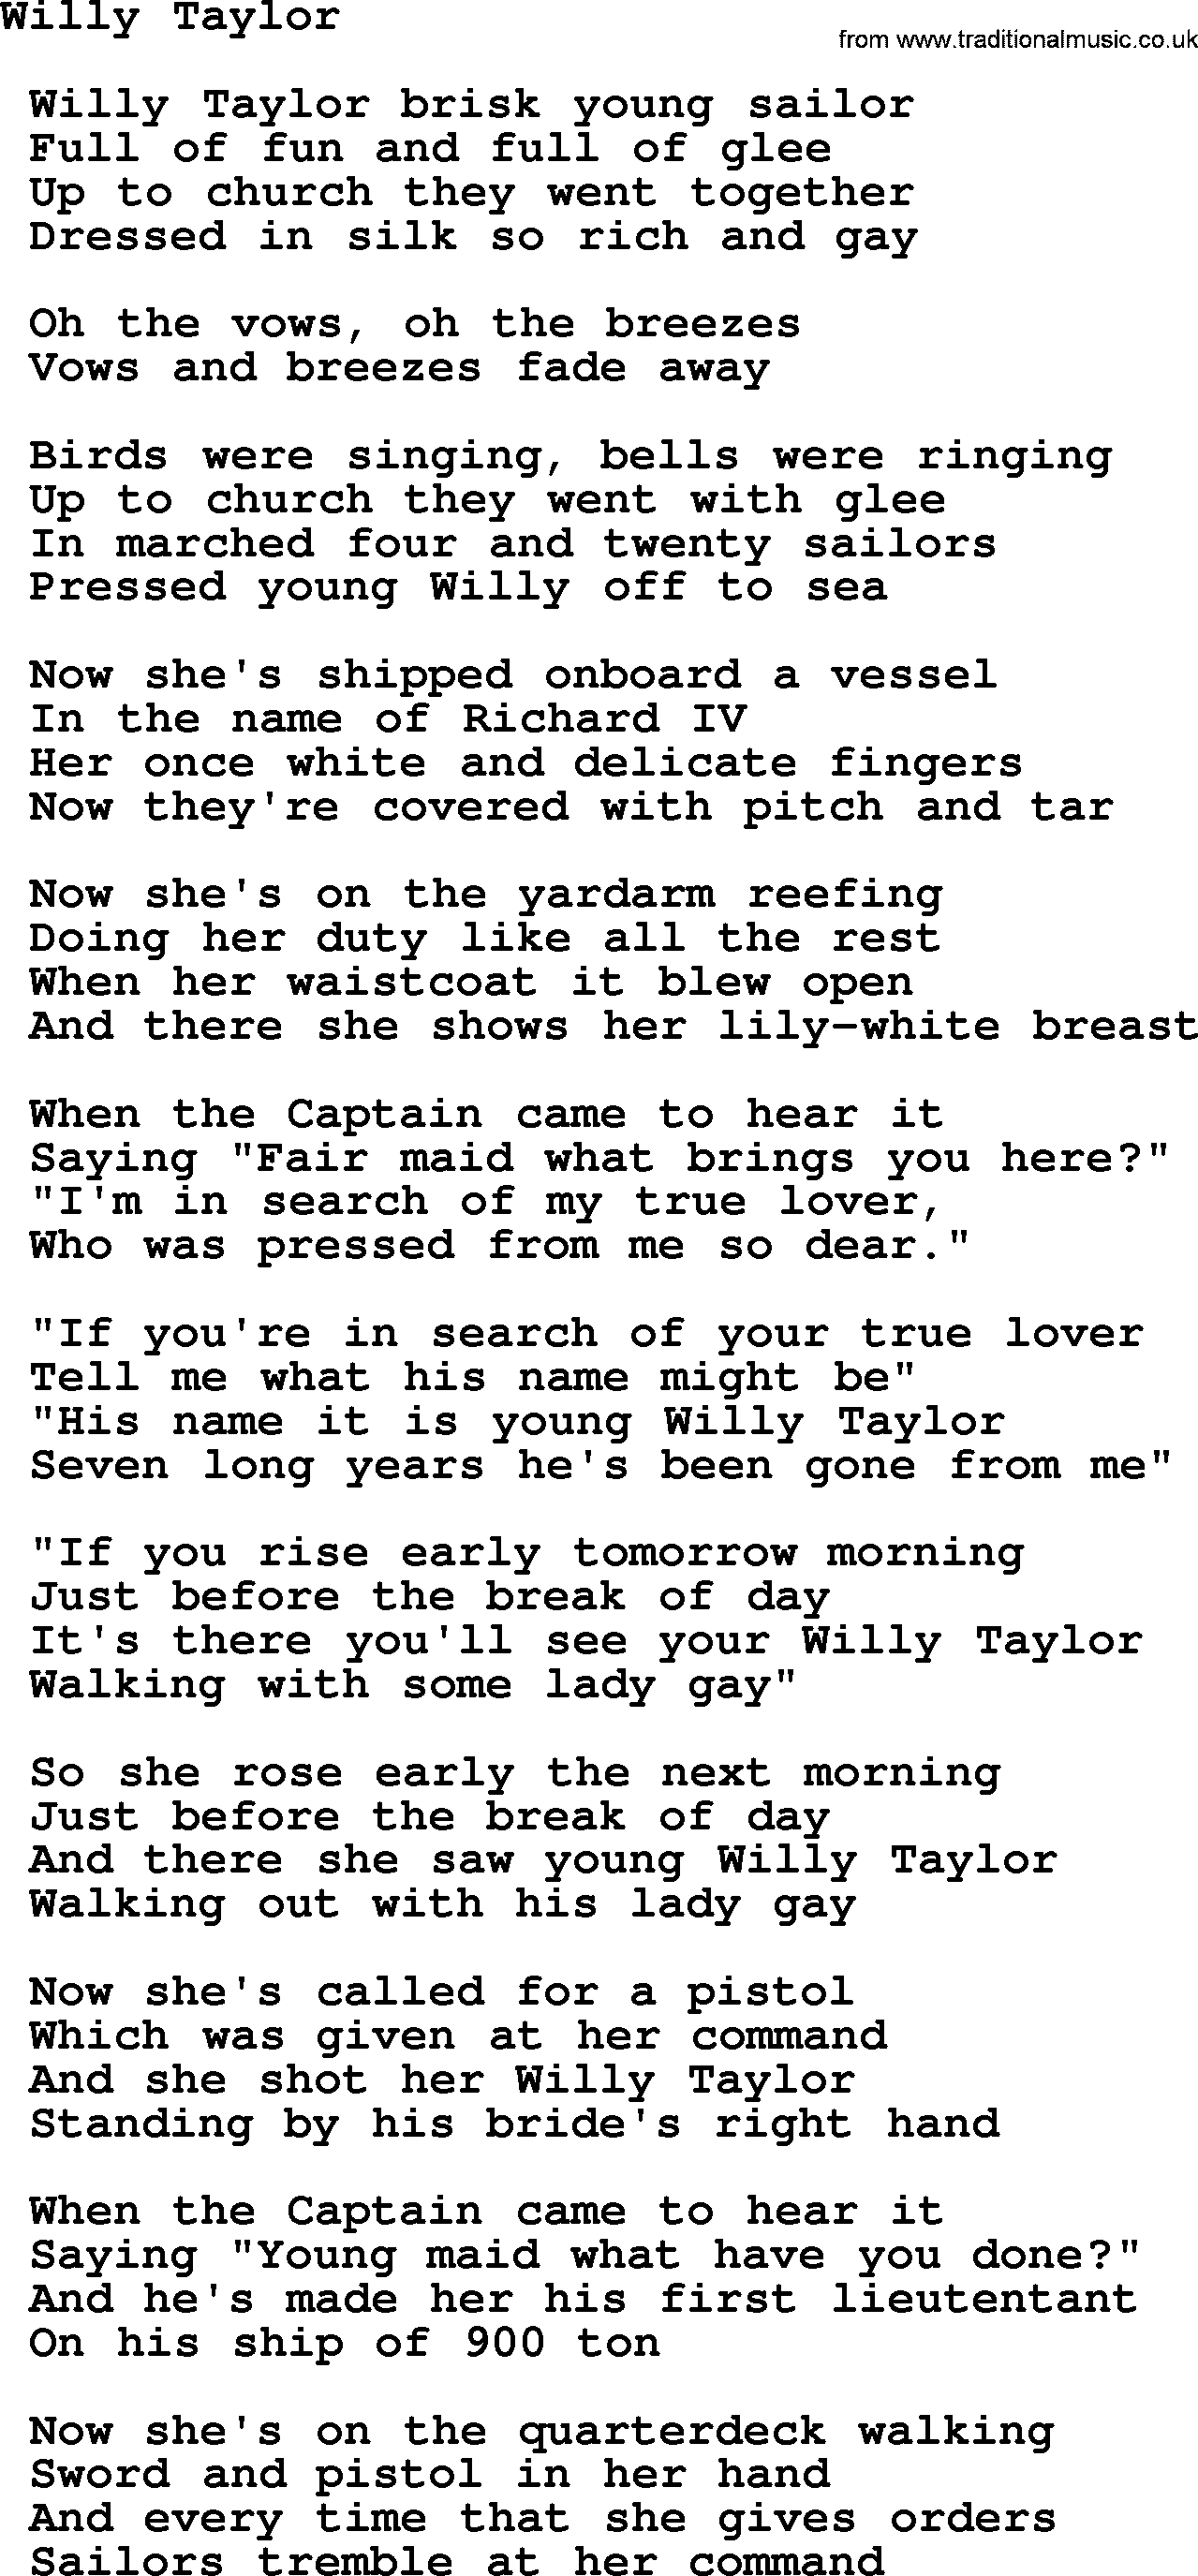 Sea Song or Shantie: Willy Taylor, lyrics